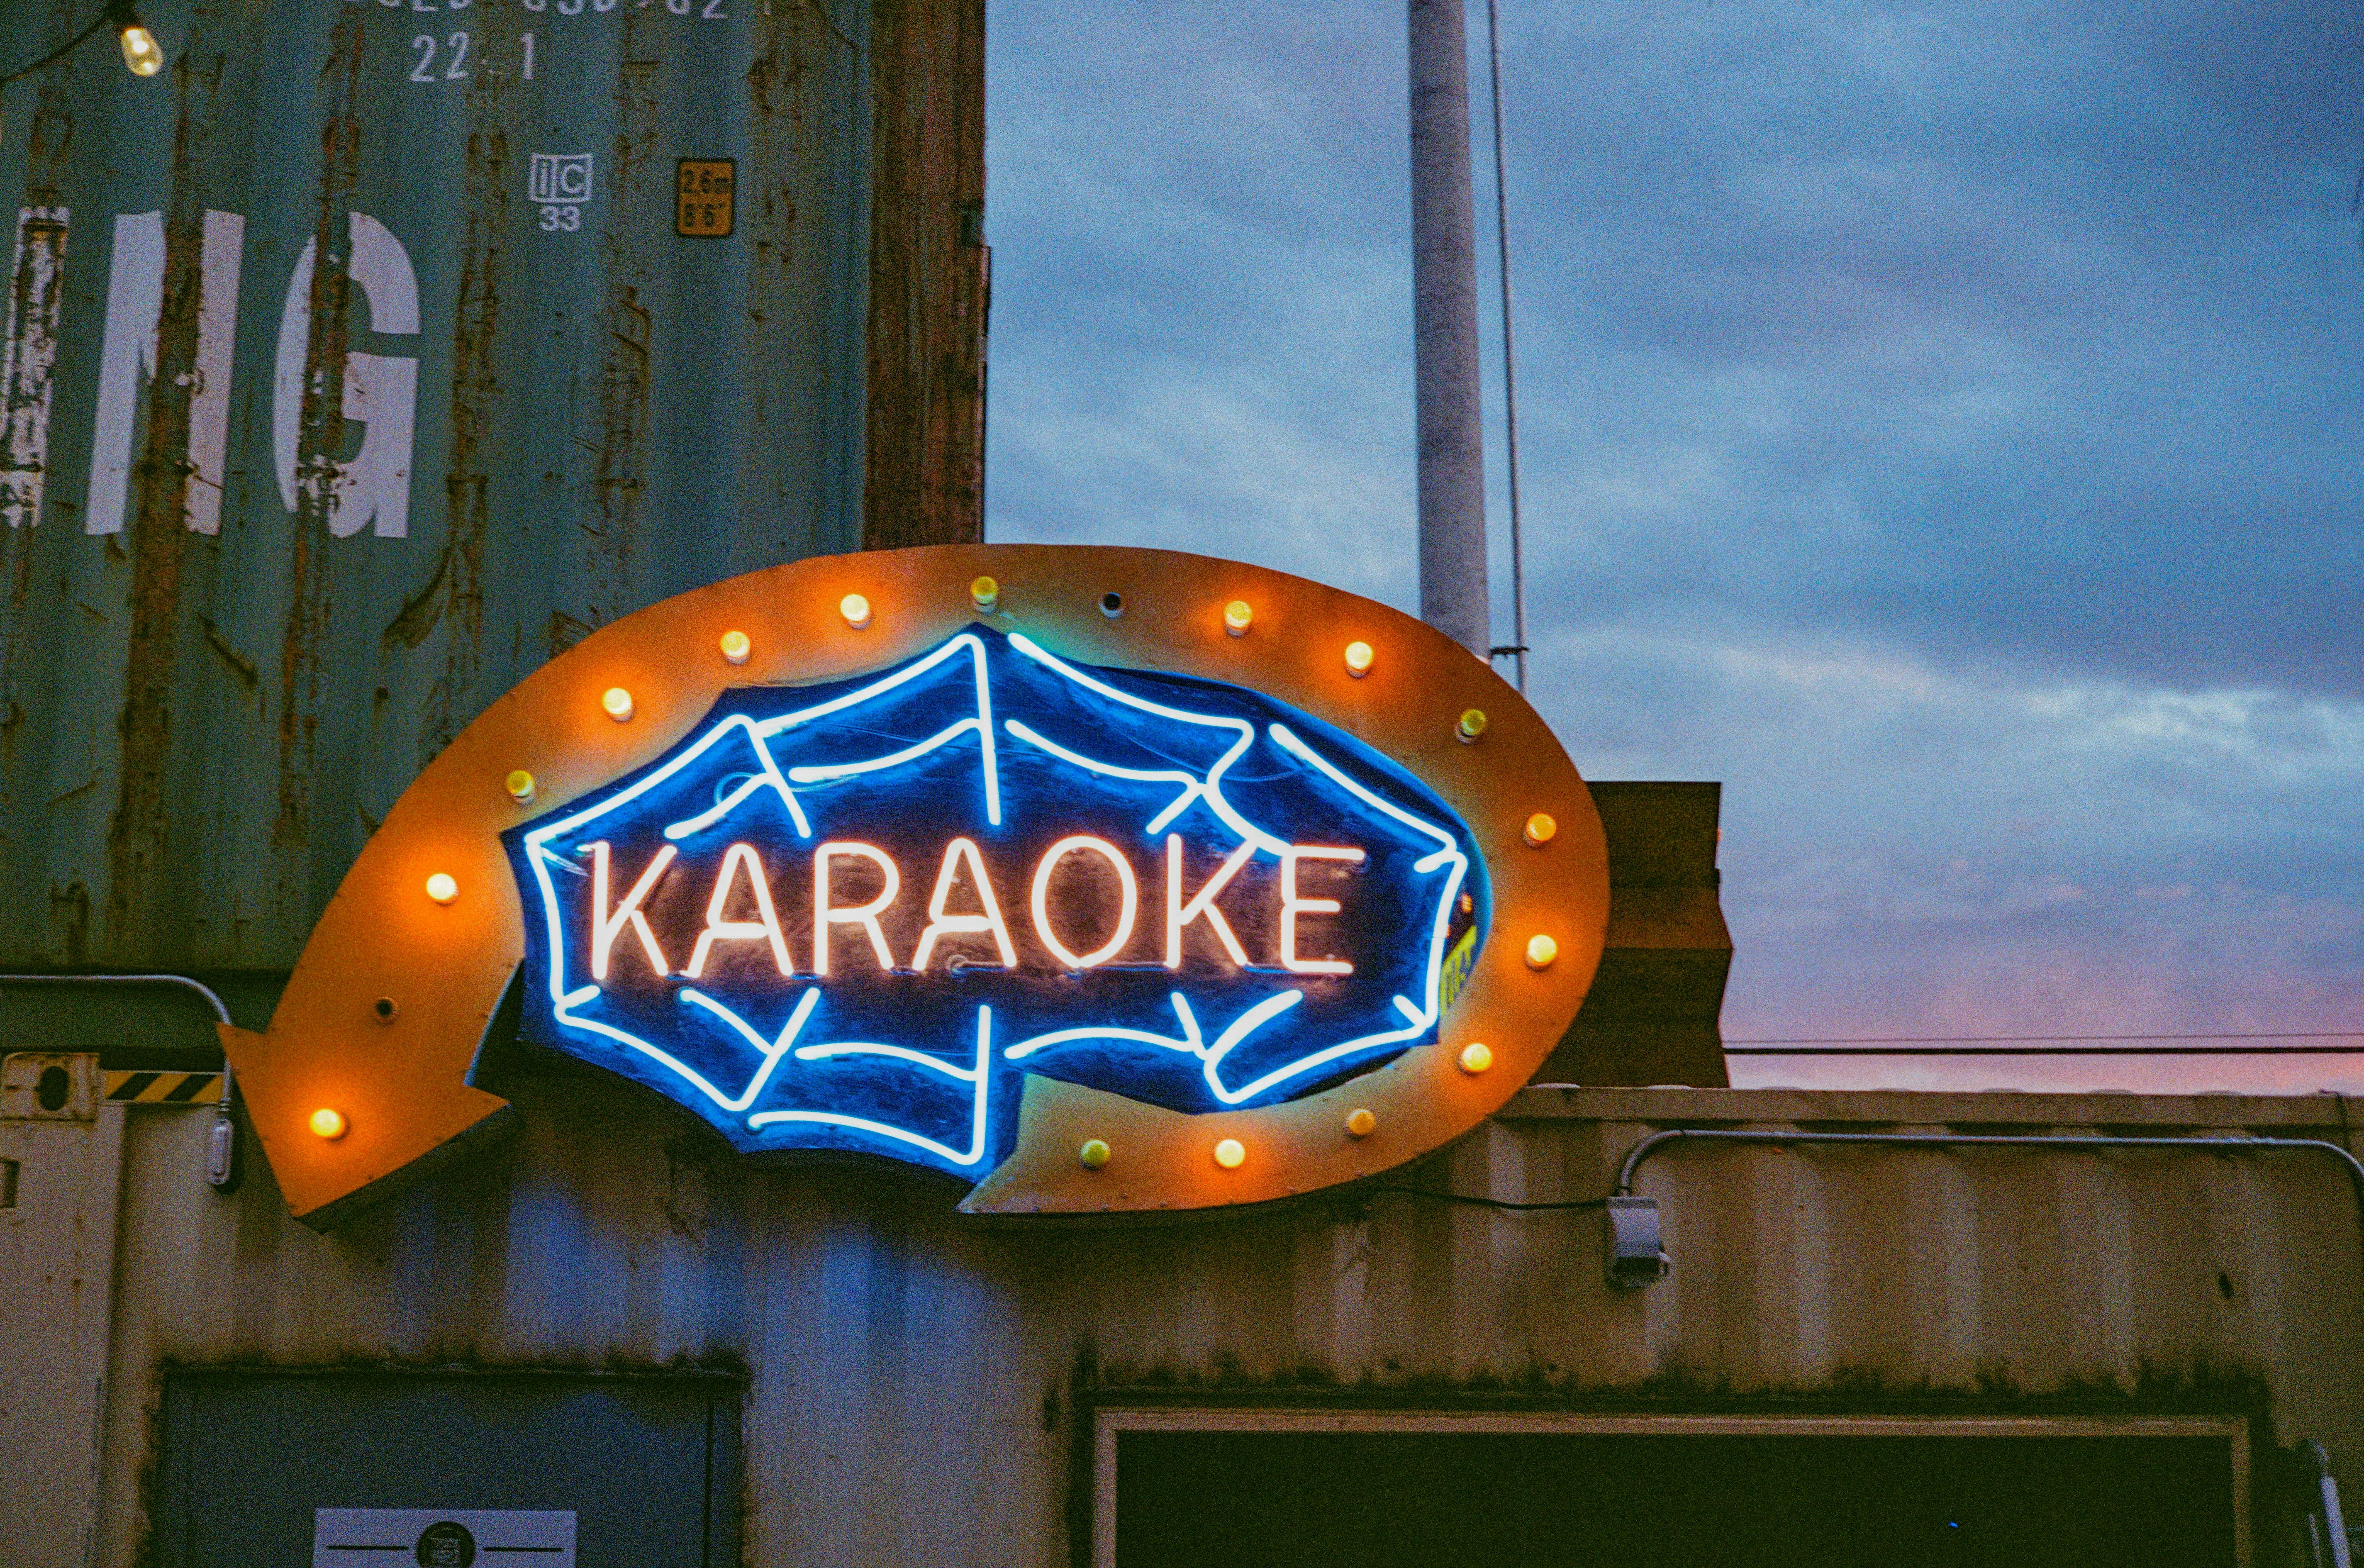 The neon sign for a karaoke bar